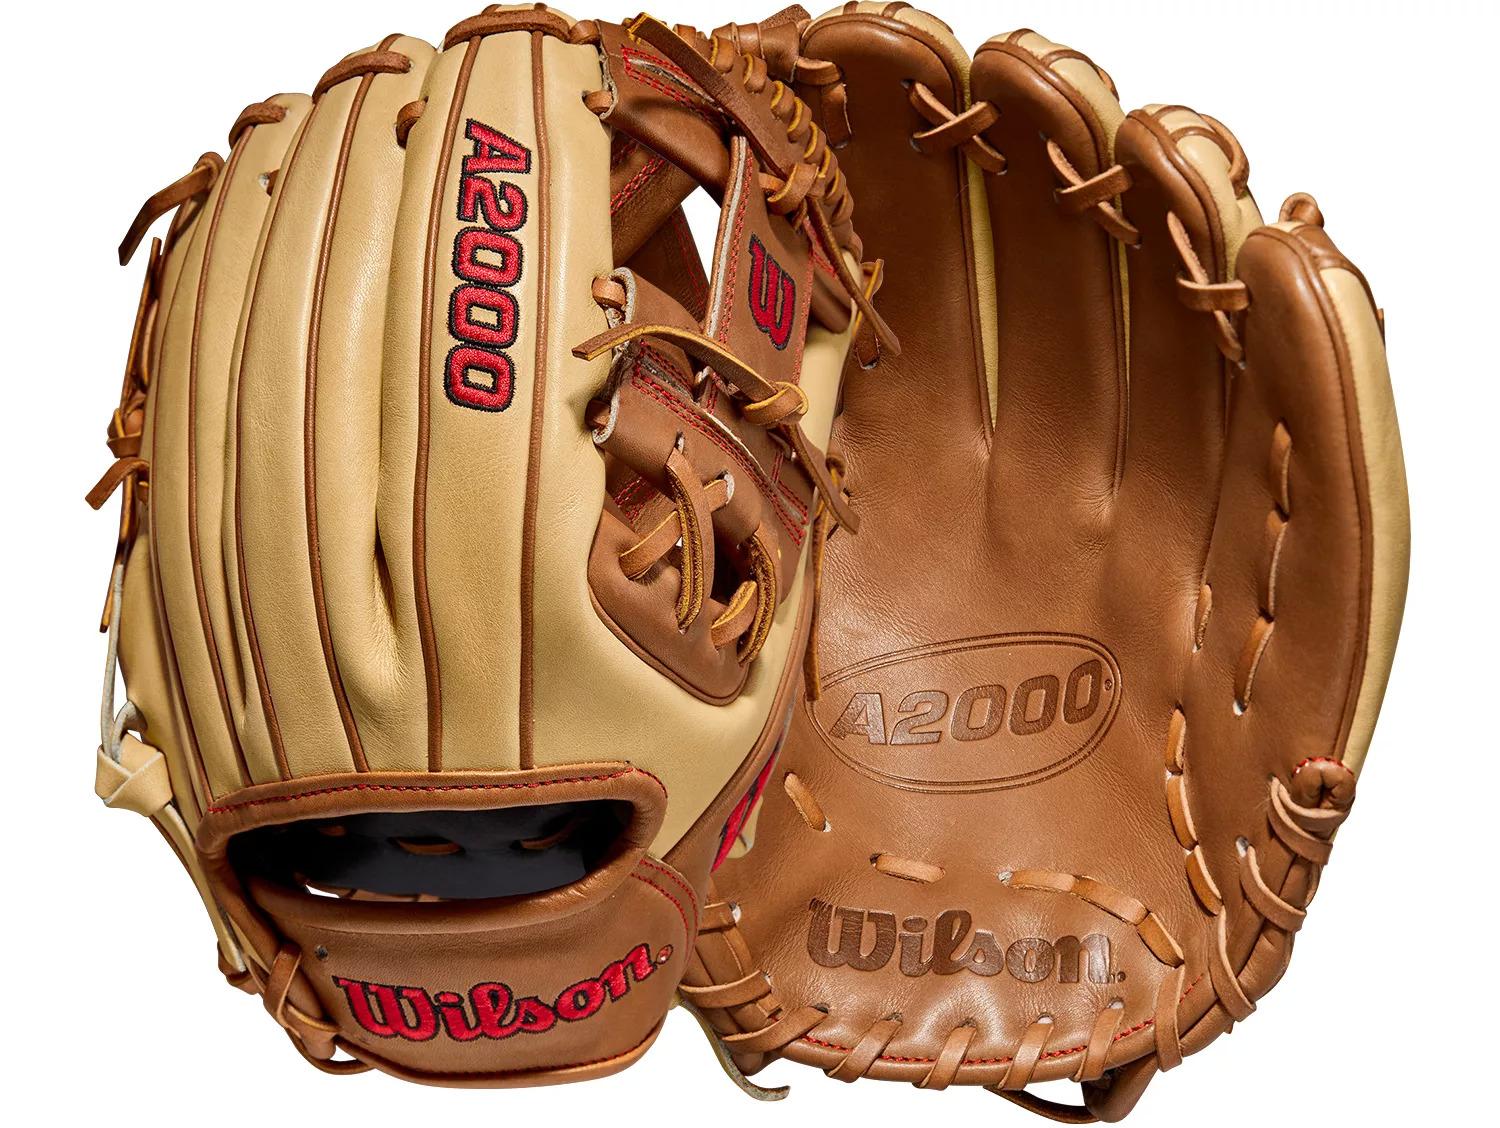 Wilson 1786 A2000 Series Baseball Glove for $199.98 Shipped